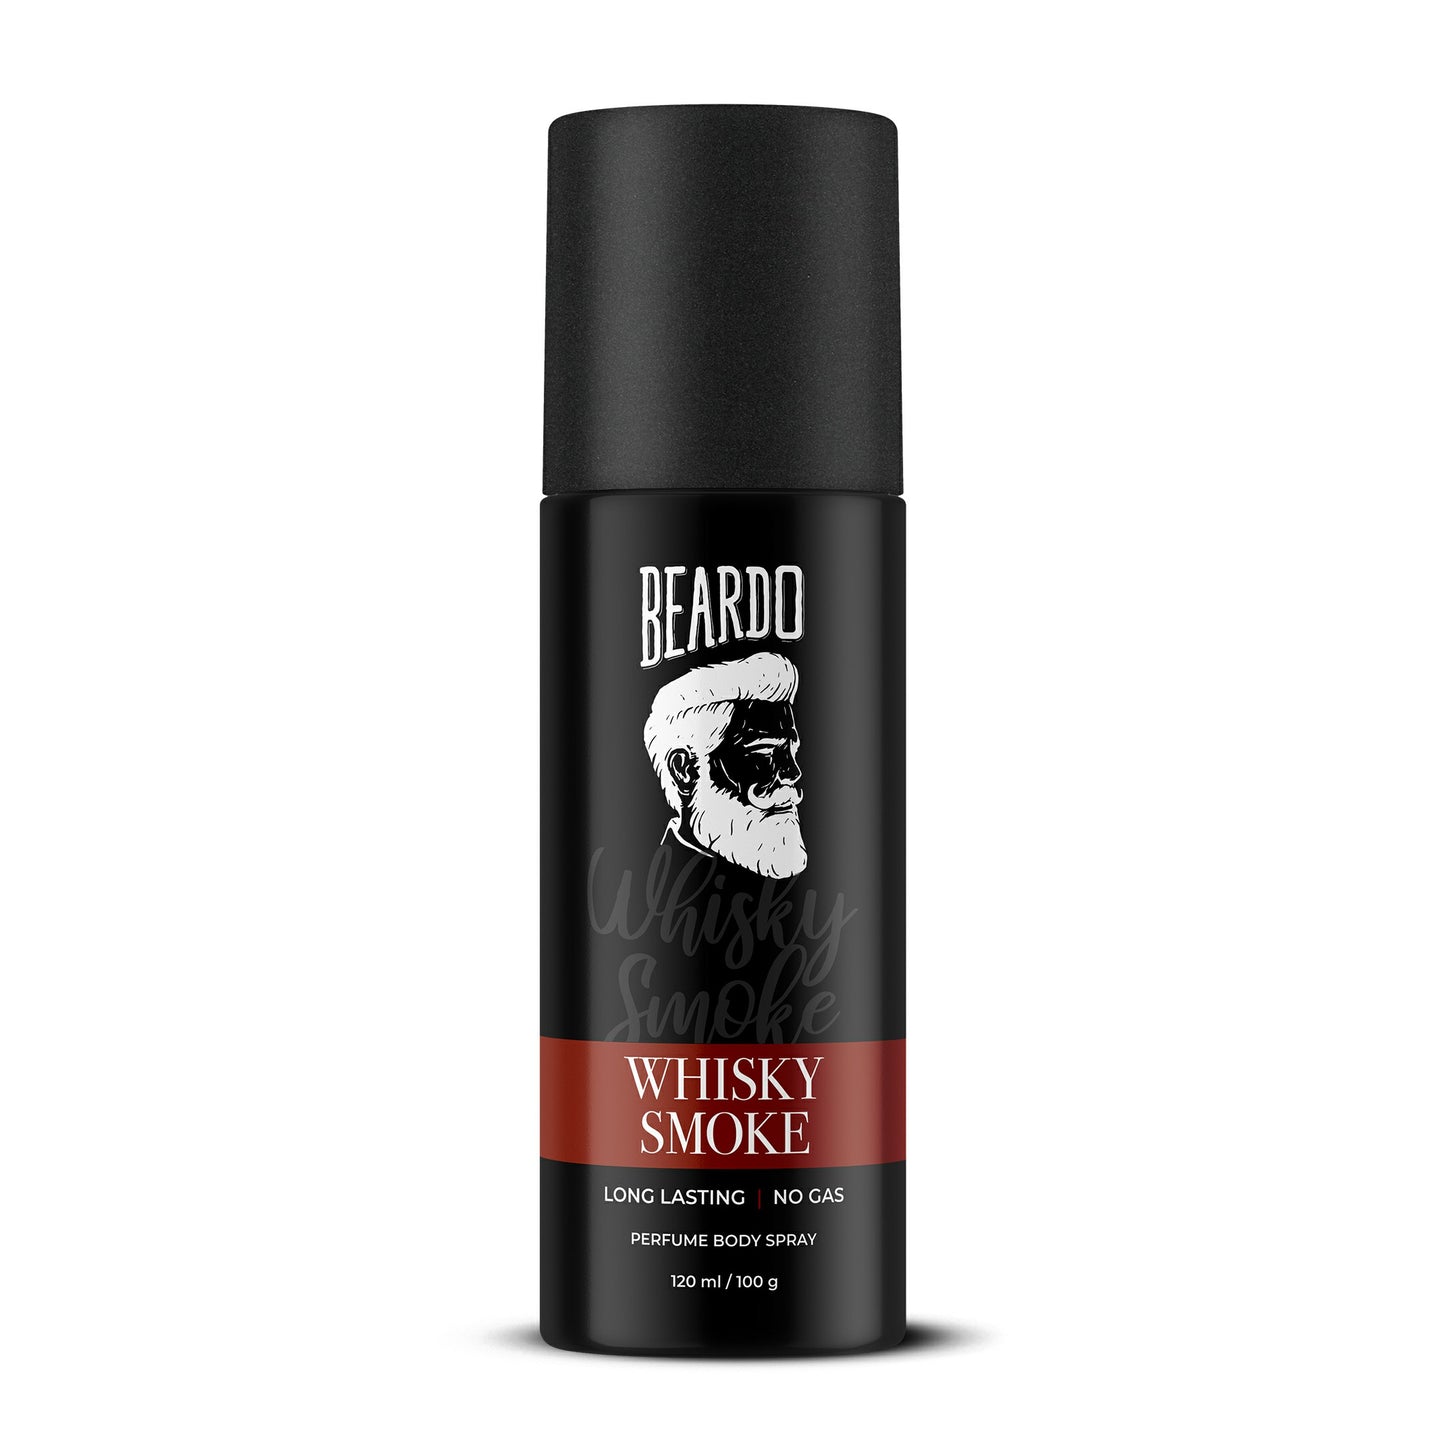 whisky smoke, body spray for men